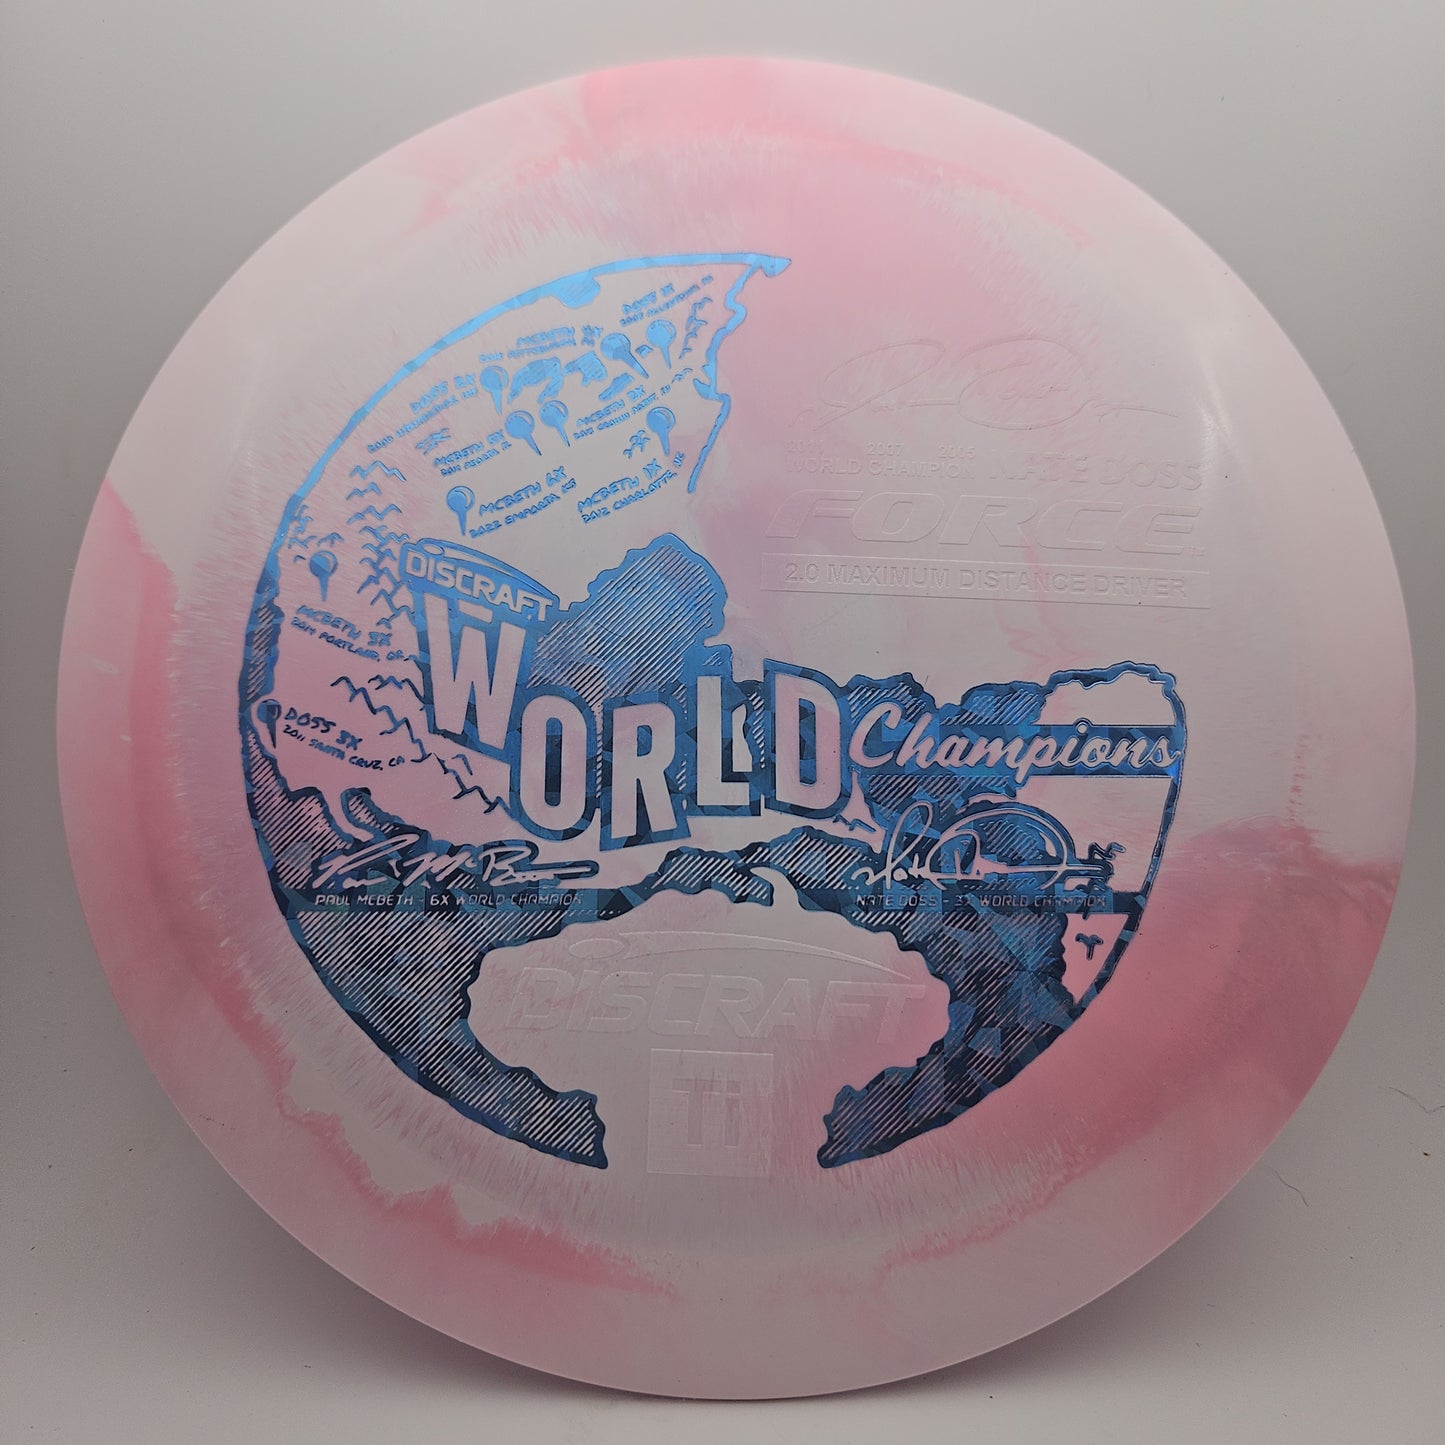 #6510 170-172g Pink, World Champions Titanium Force - McBeth and Doss World Champions